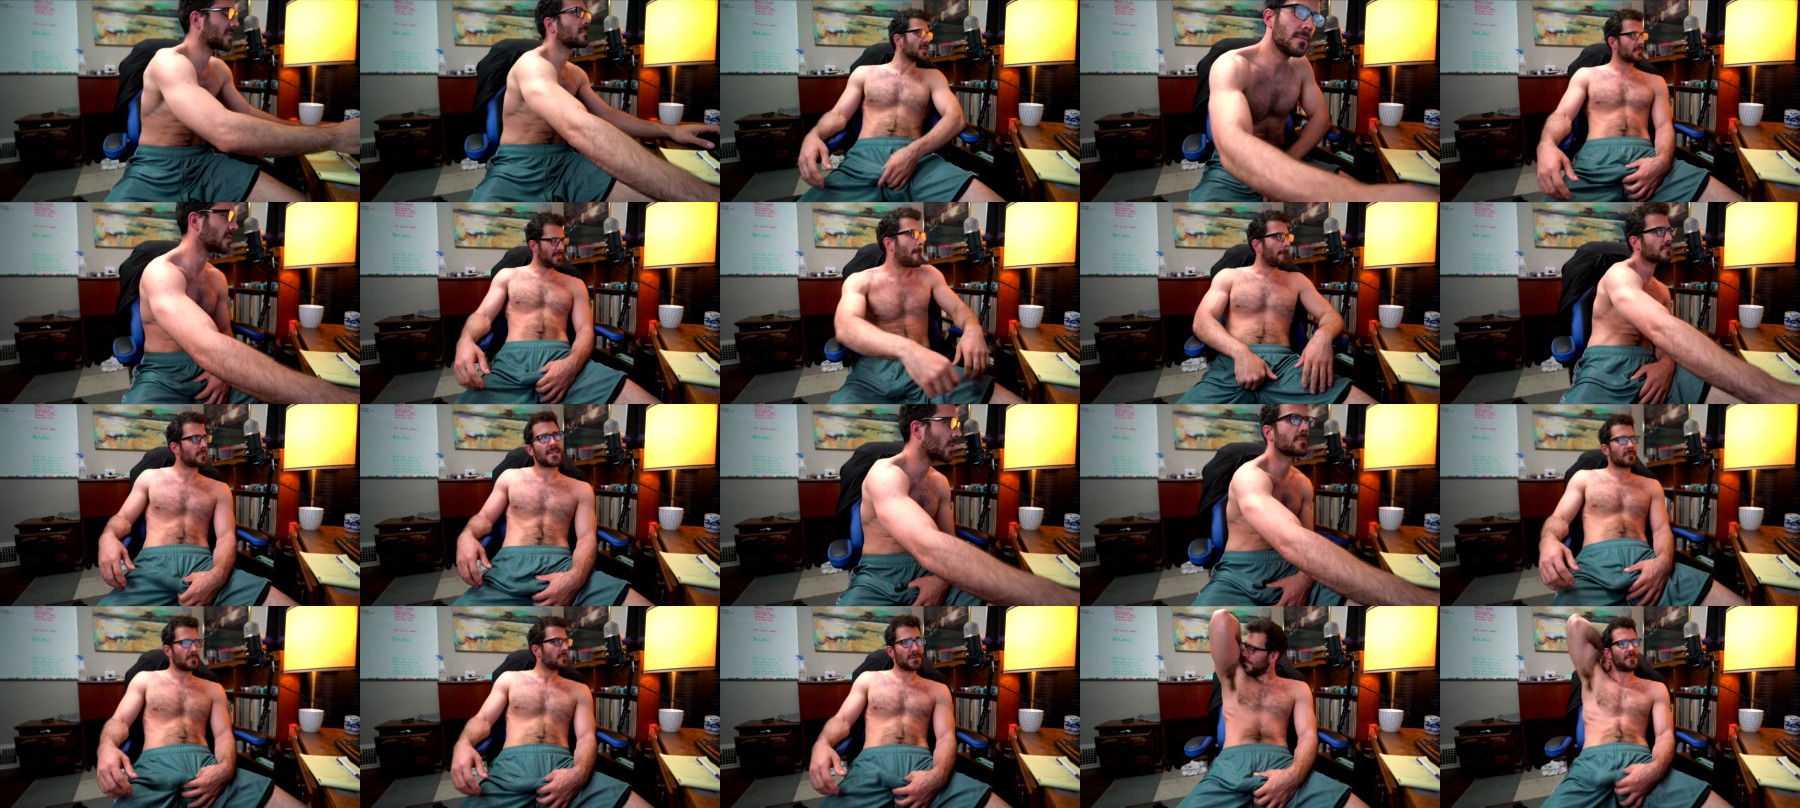 Dcrocket88  29-04-2021 Male Topless